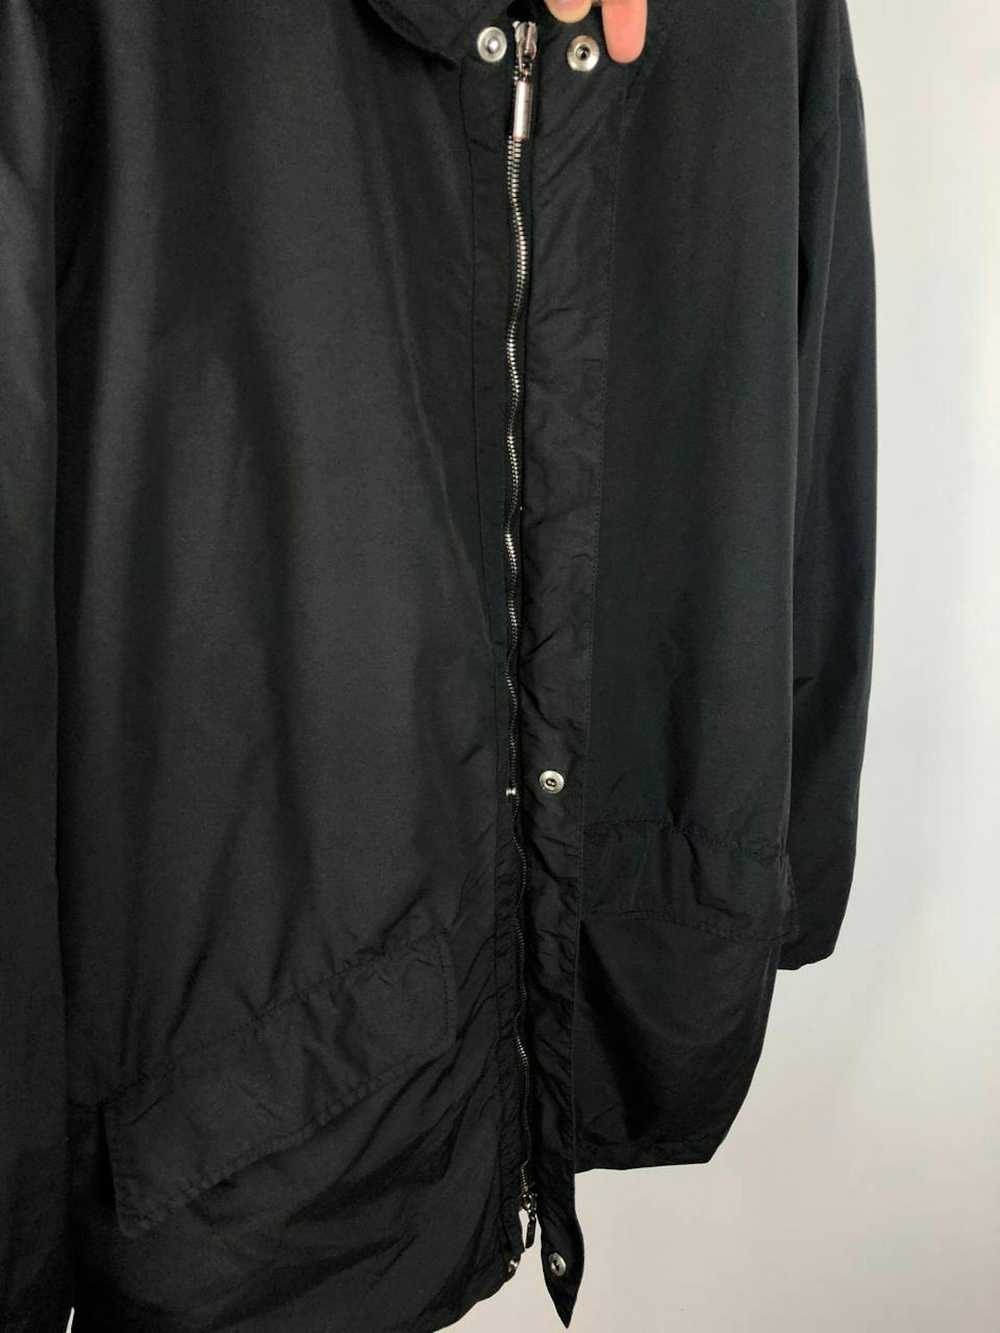 Cerruti 1881 Cerutti 1881 Vintage Jacket Black si… - image 7